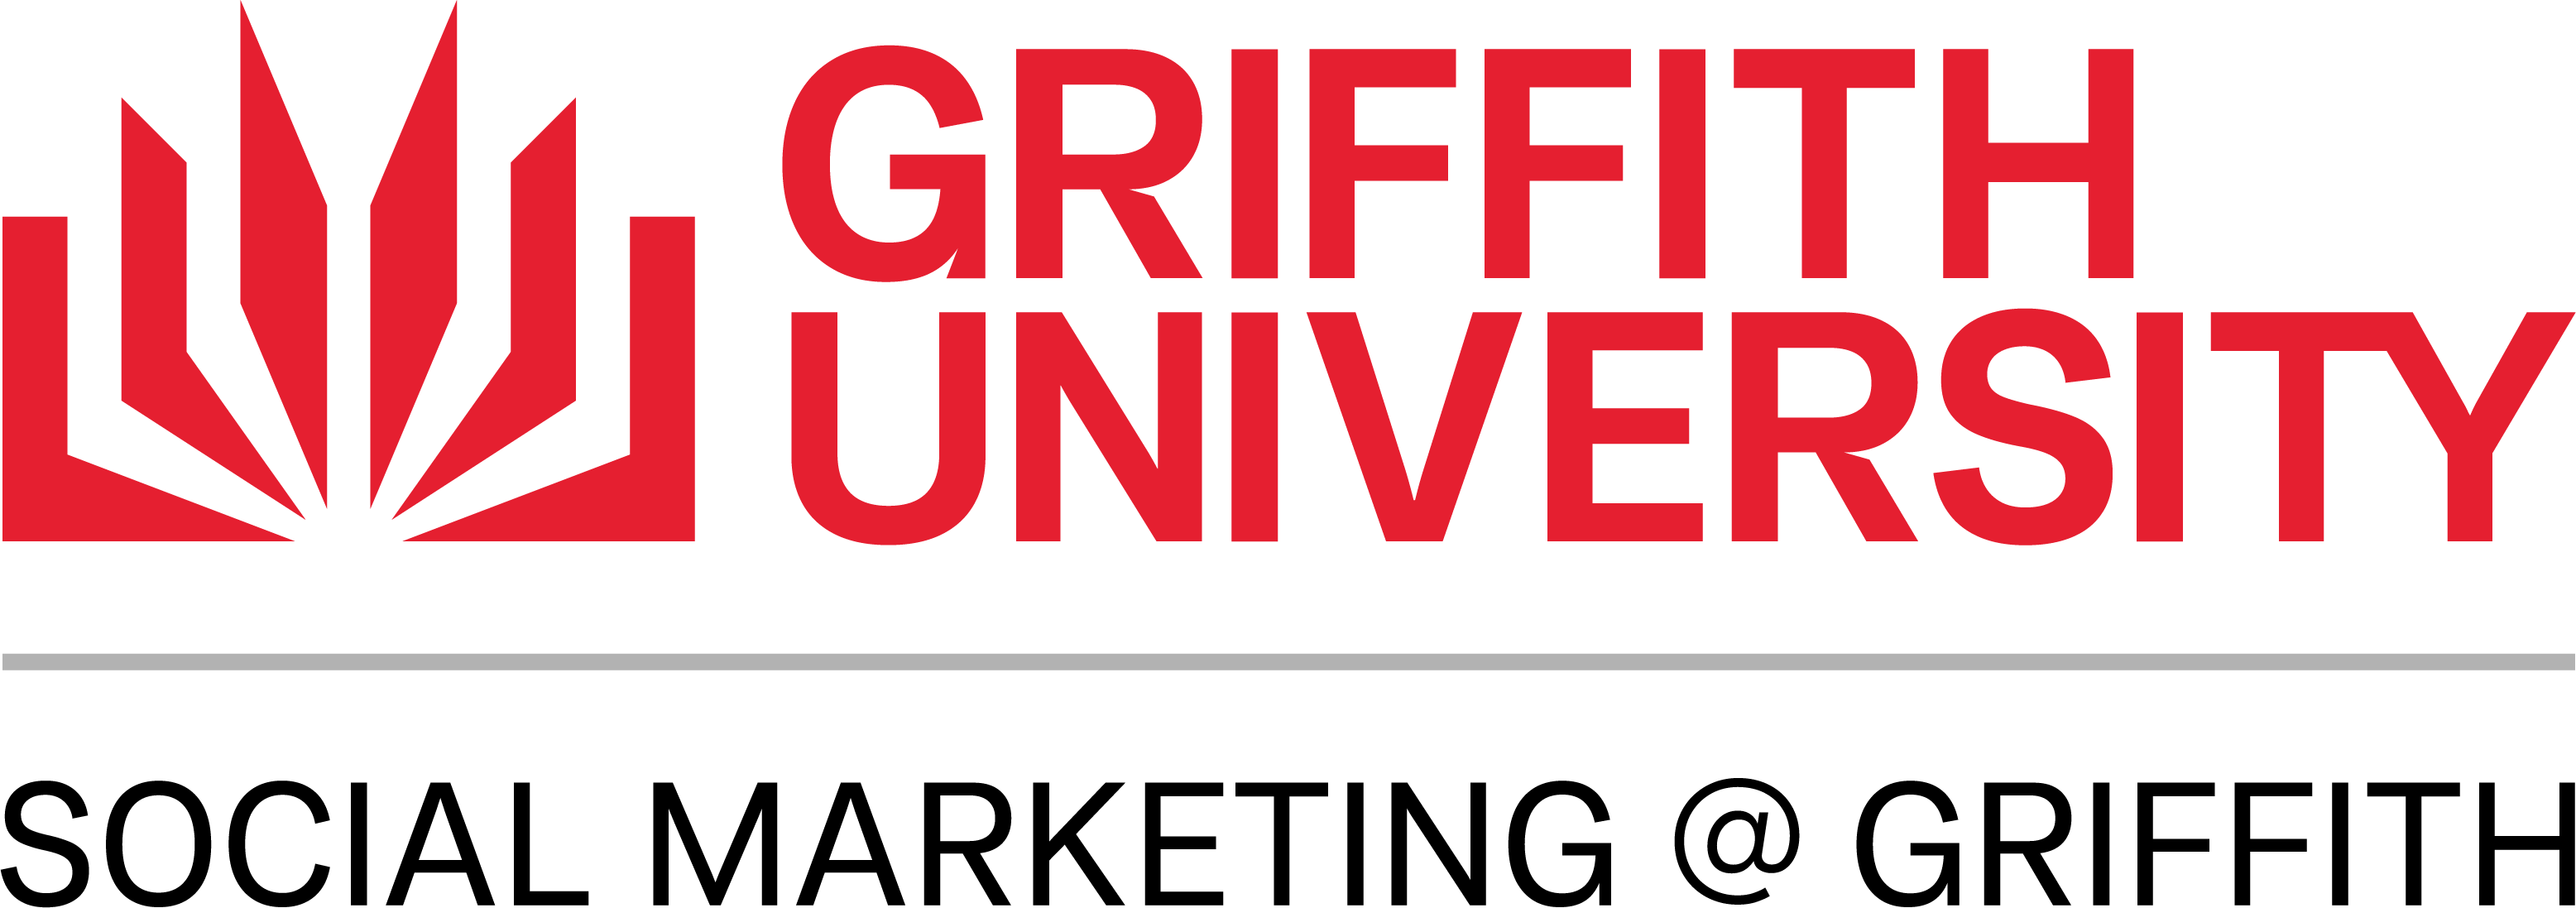 Social Marketing @ Griffith's logo